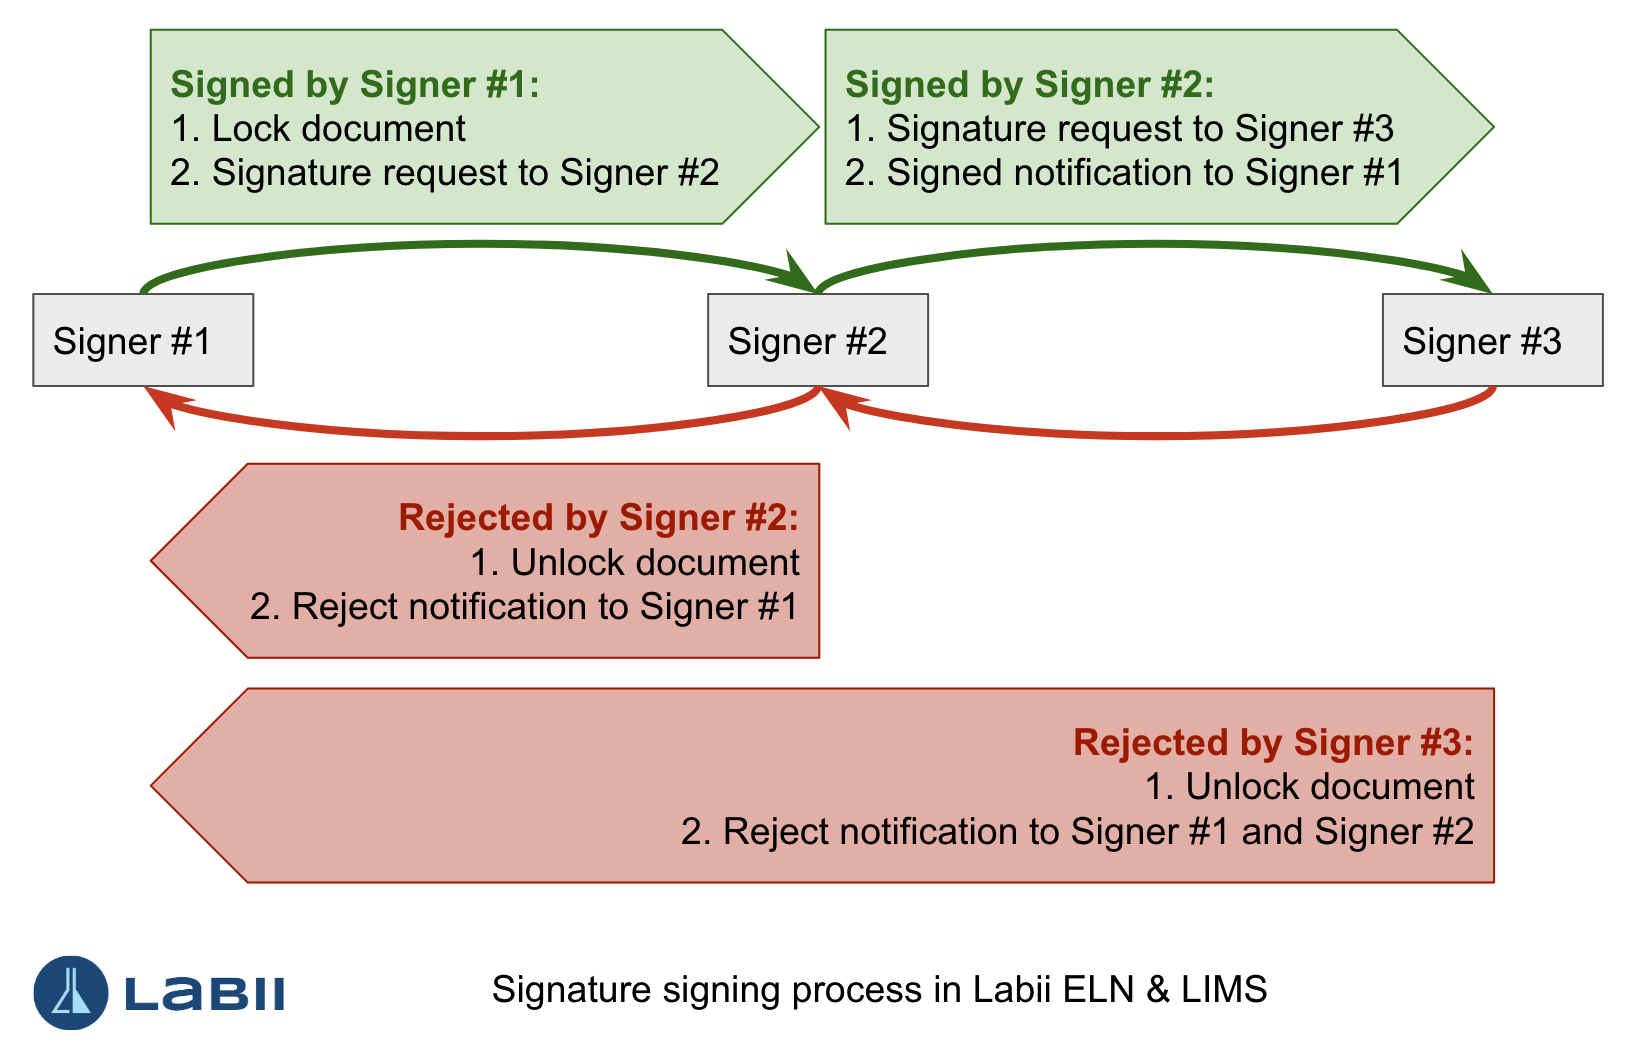 Signign order